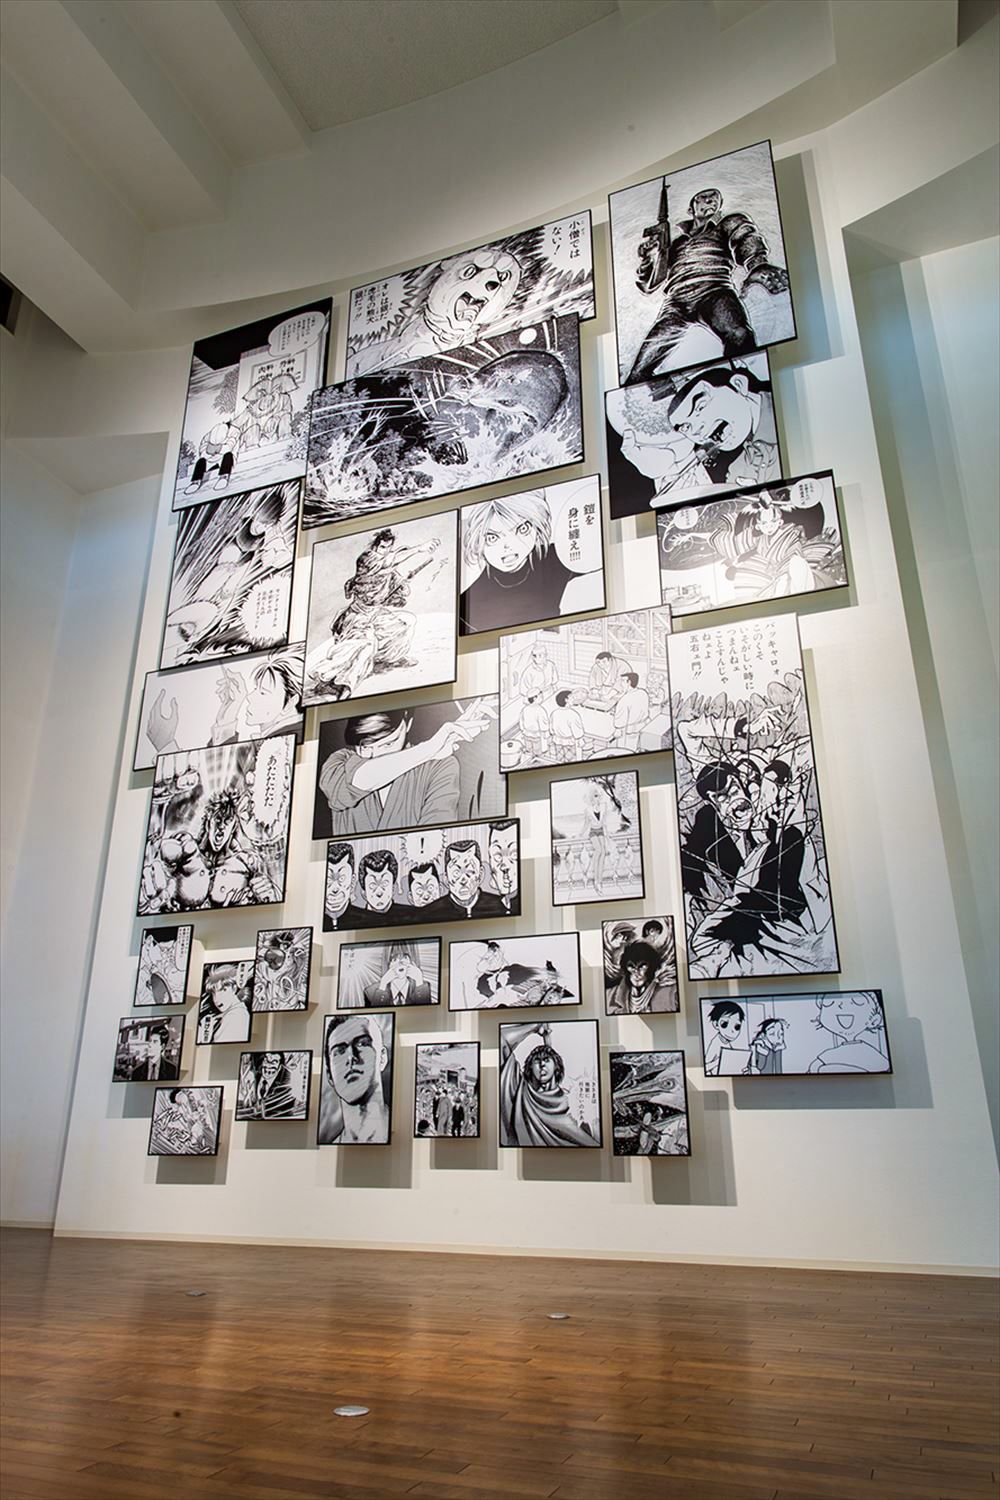 The “manga wall” features a montage of panels from popular manga. (Courtesy Yokote Masuda Manga Museum)